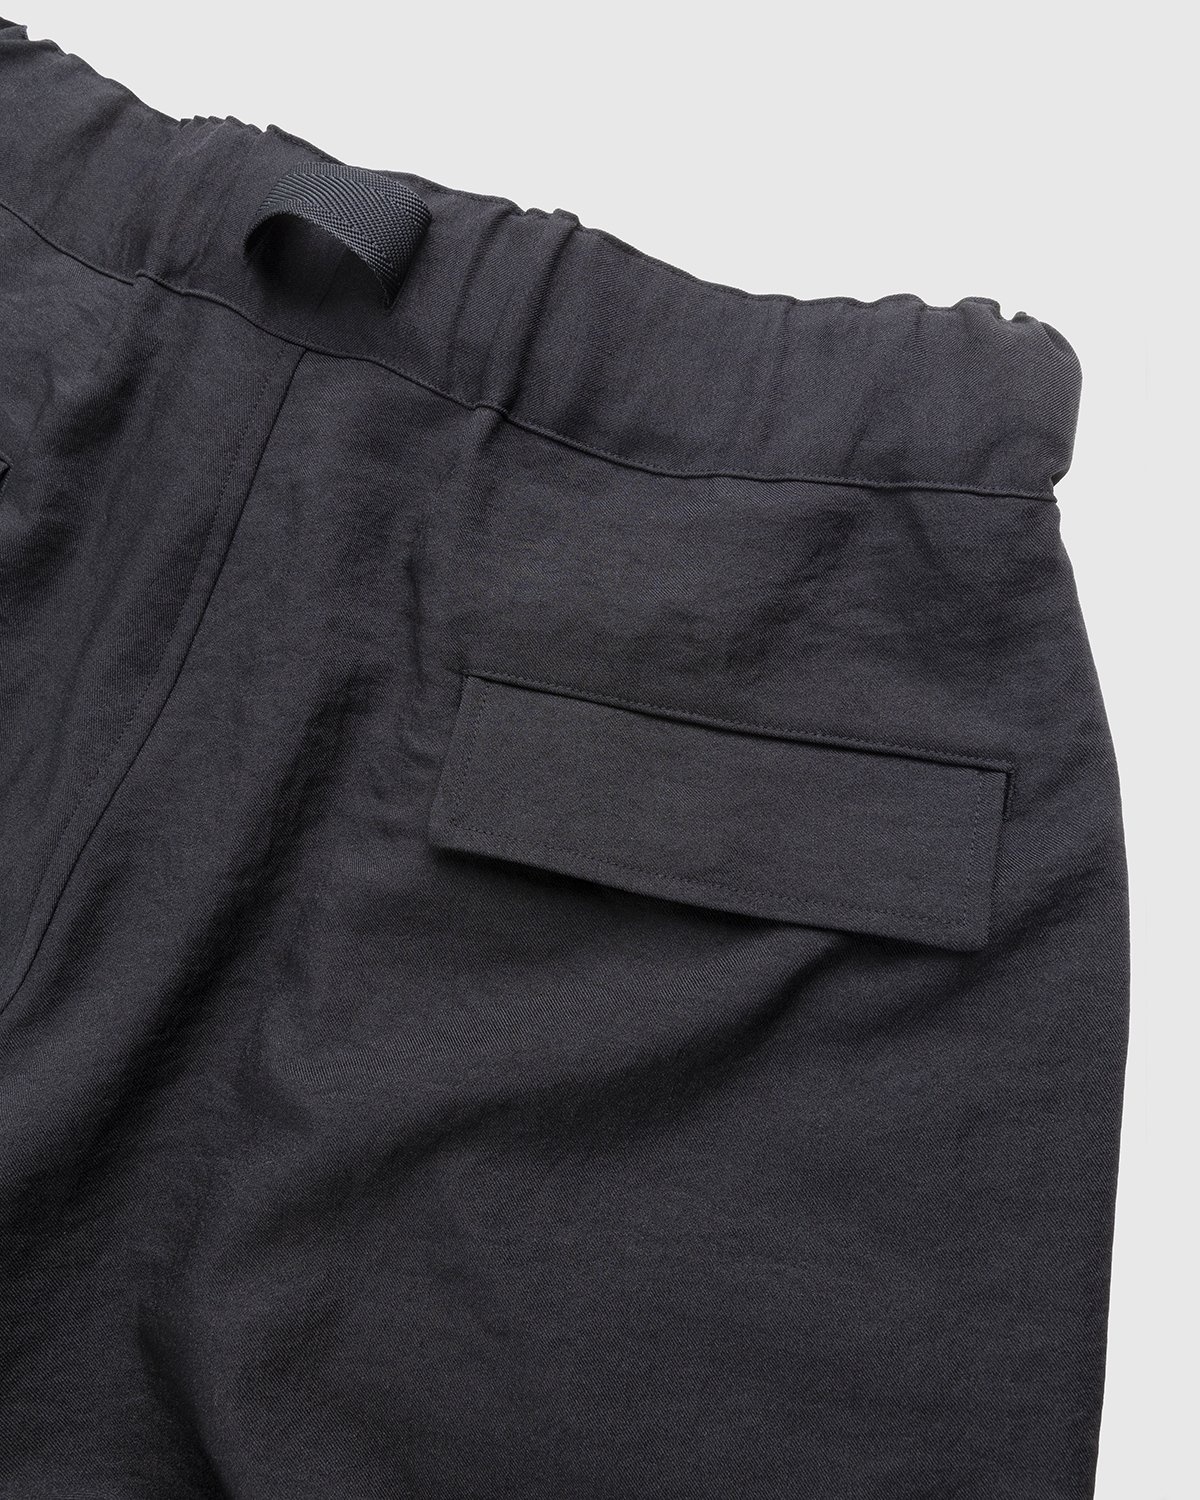 Y-3 – Classic Sport Uniform Shorts Black - Shorts - Black - Image 4